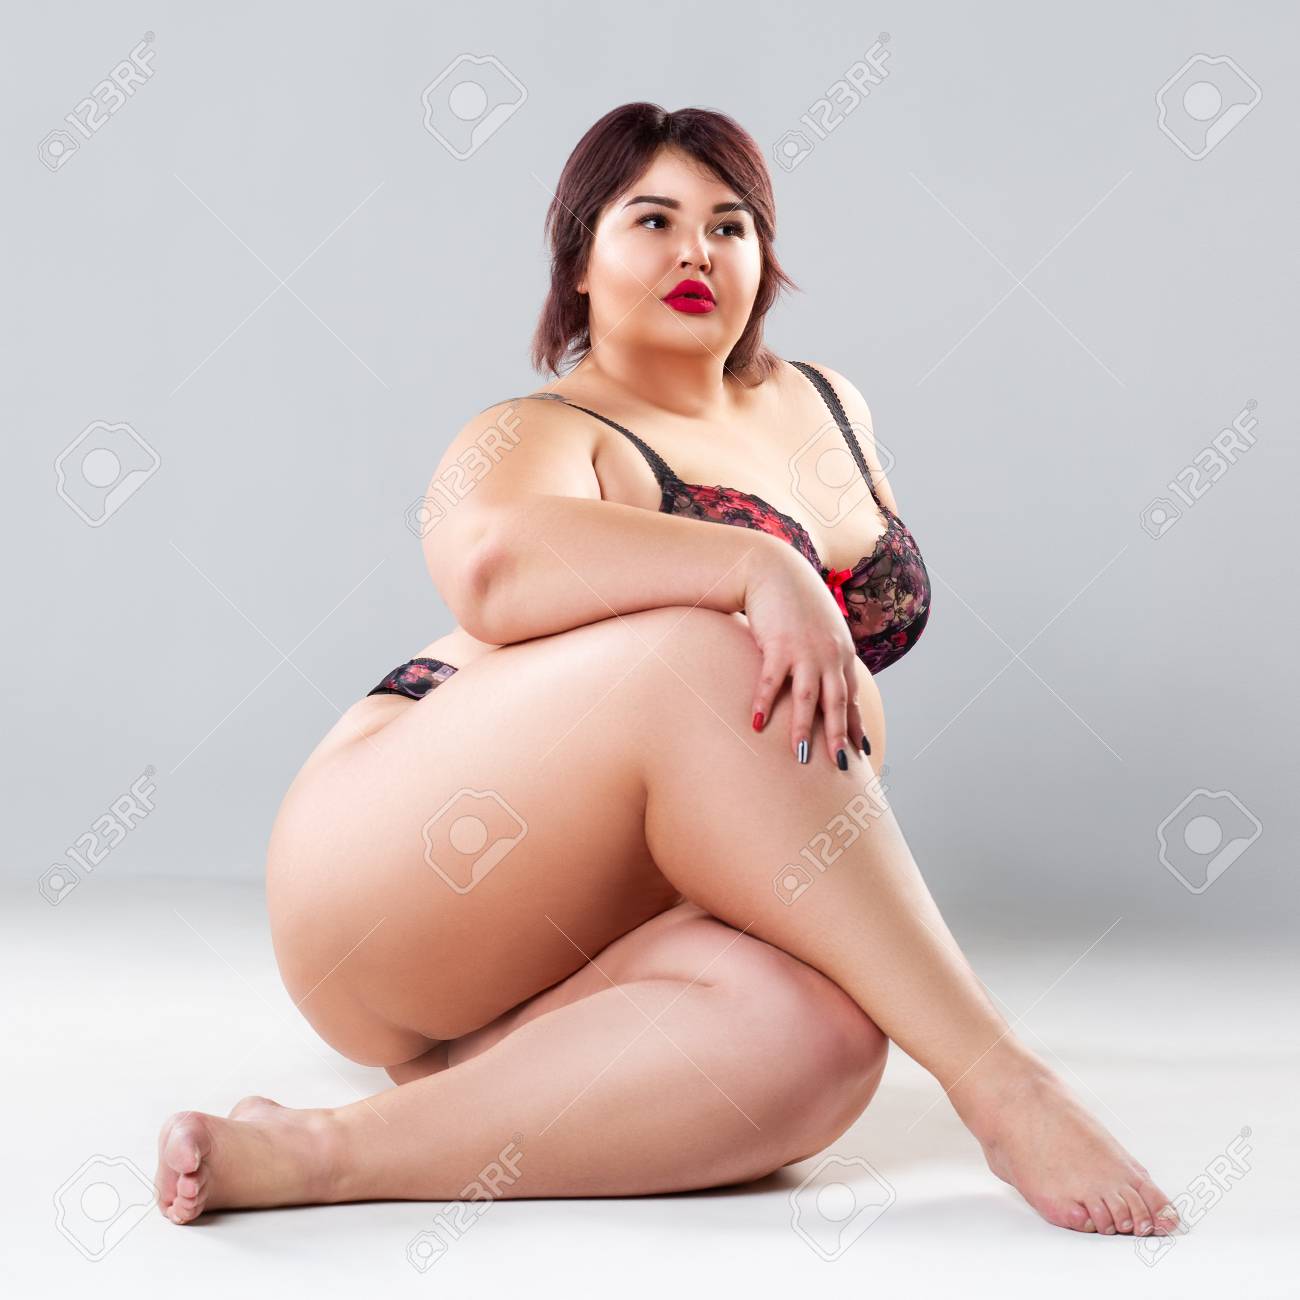 dogan akbulut recommends Pics Of Fat Sexy Women